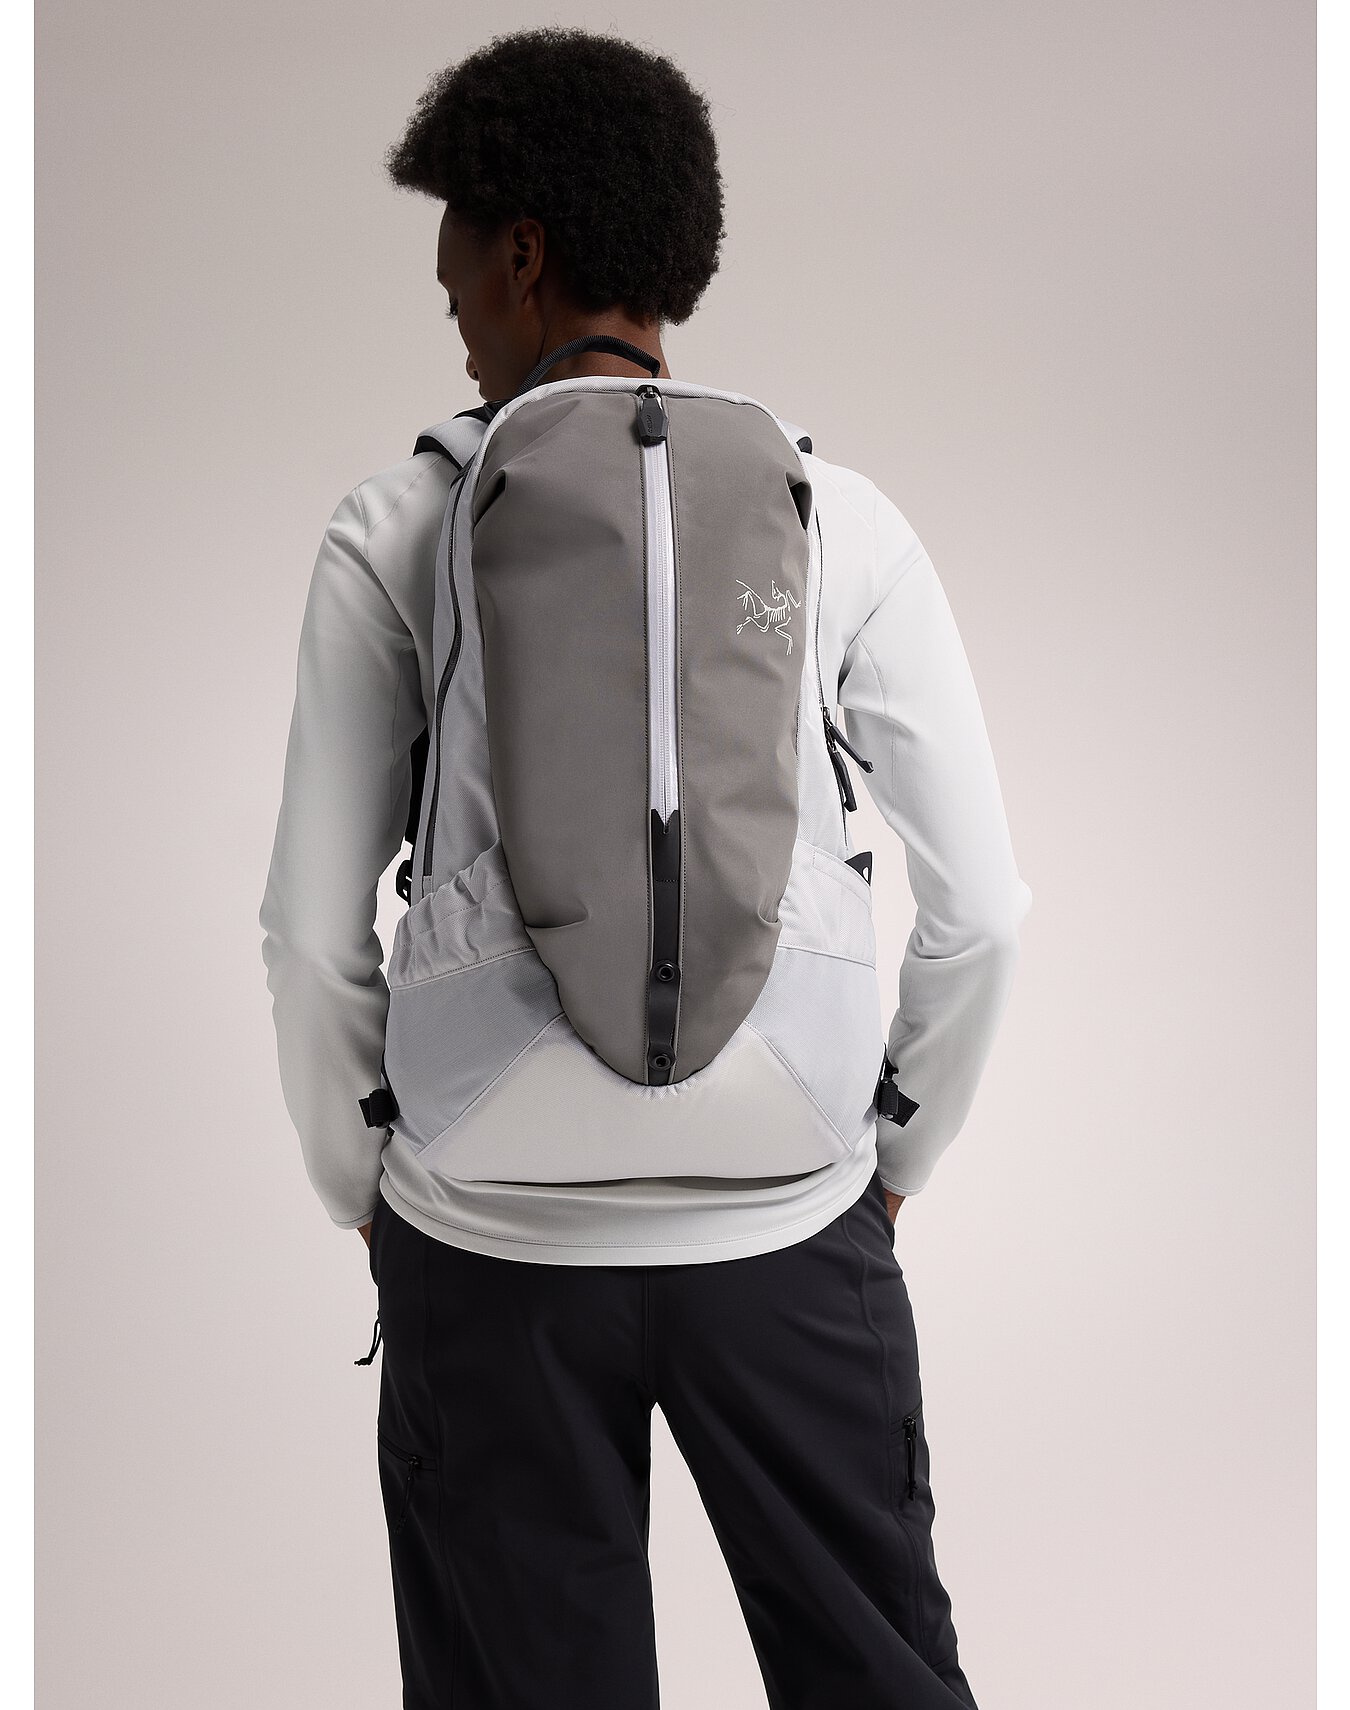 Arro 22 Backpack | Arc'teryx